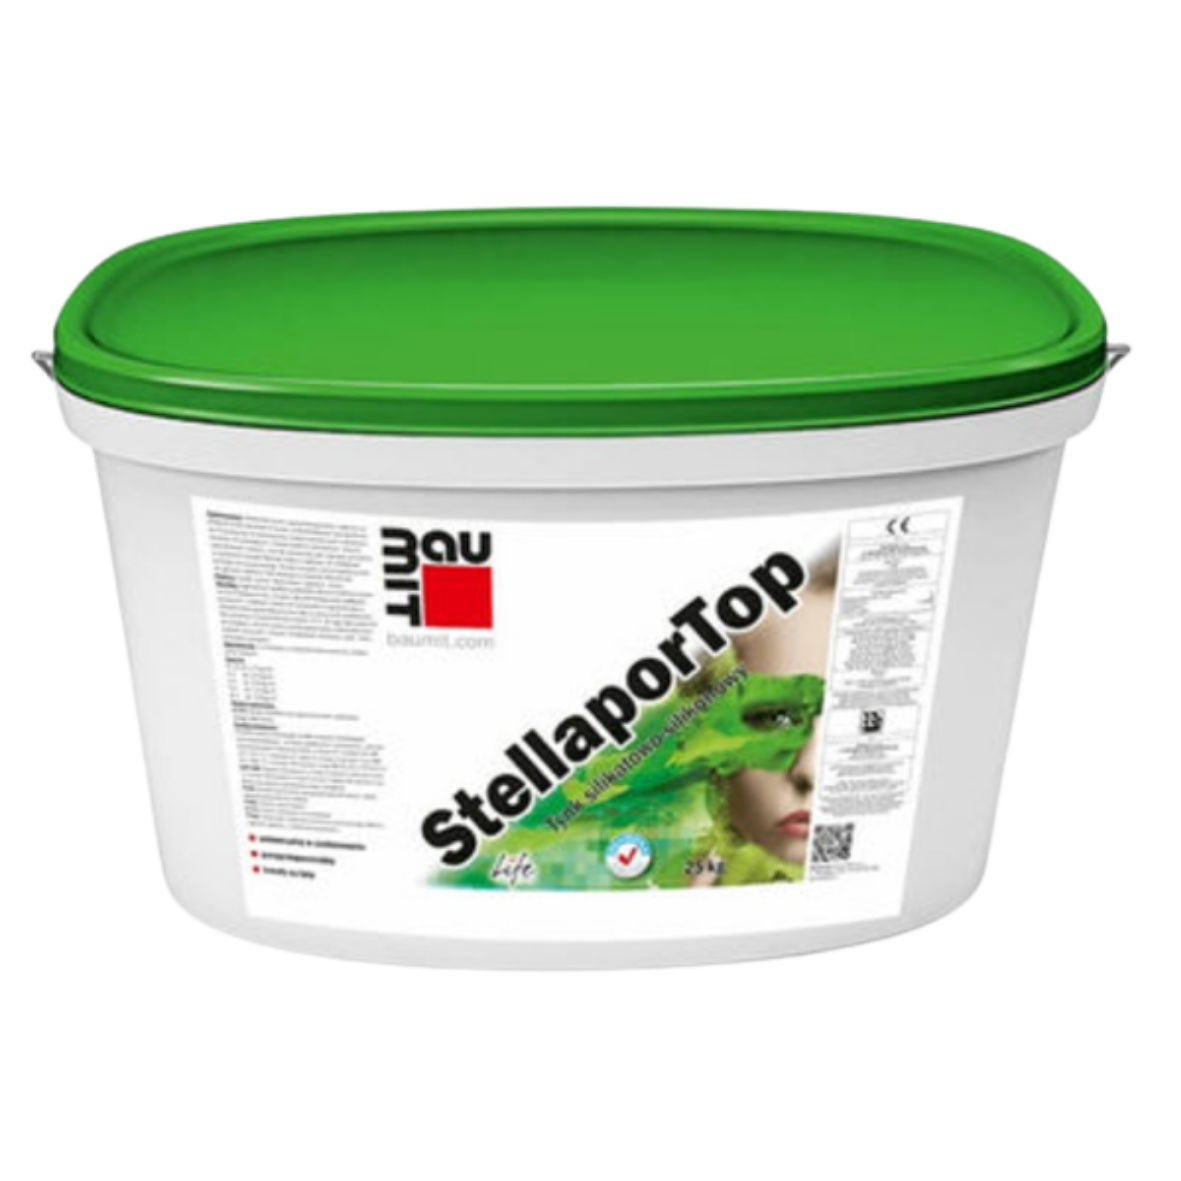 Decorative plasters - Decorative plaster Baumit StellaporTop 1.5K 25KG, https:maxbau.ro